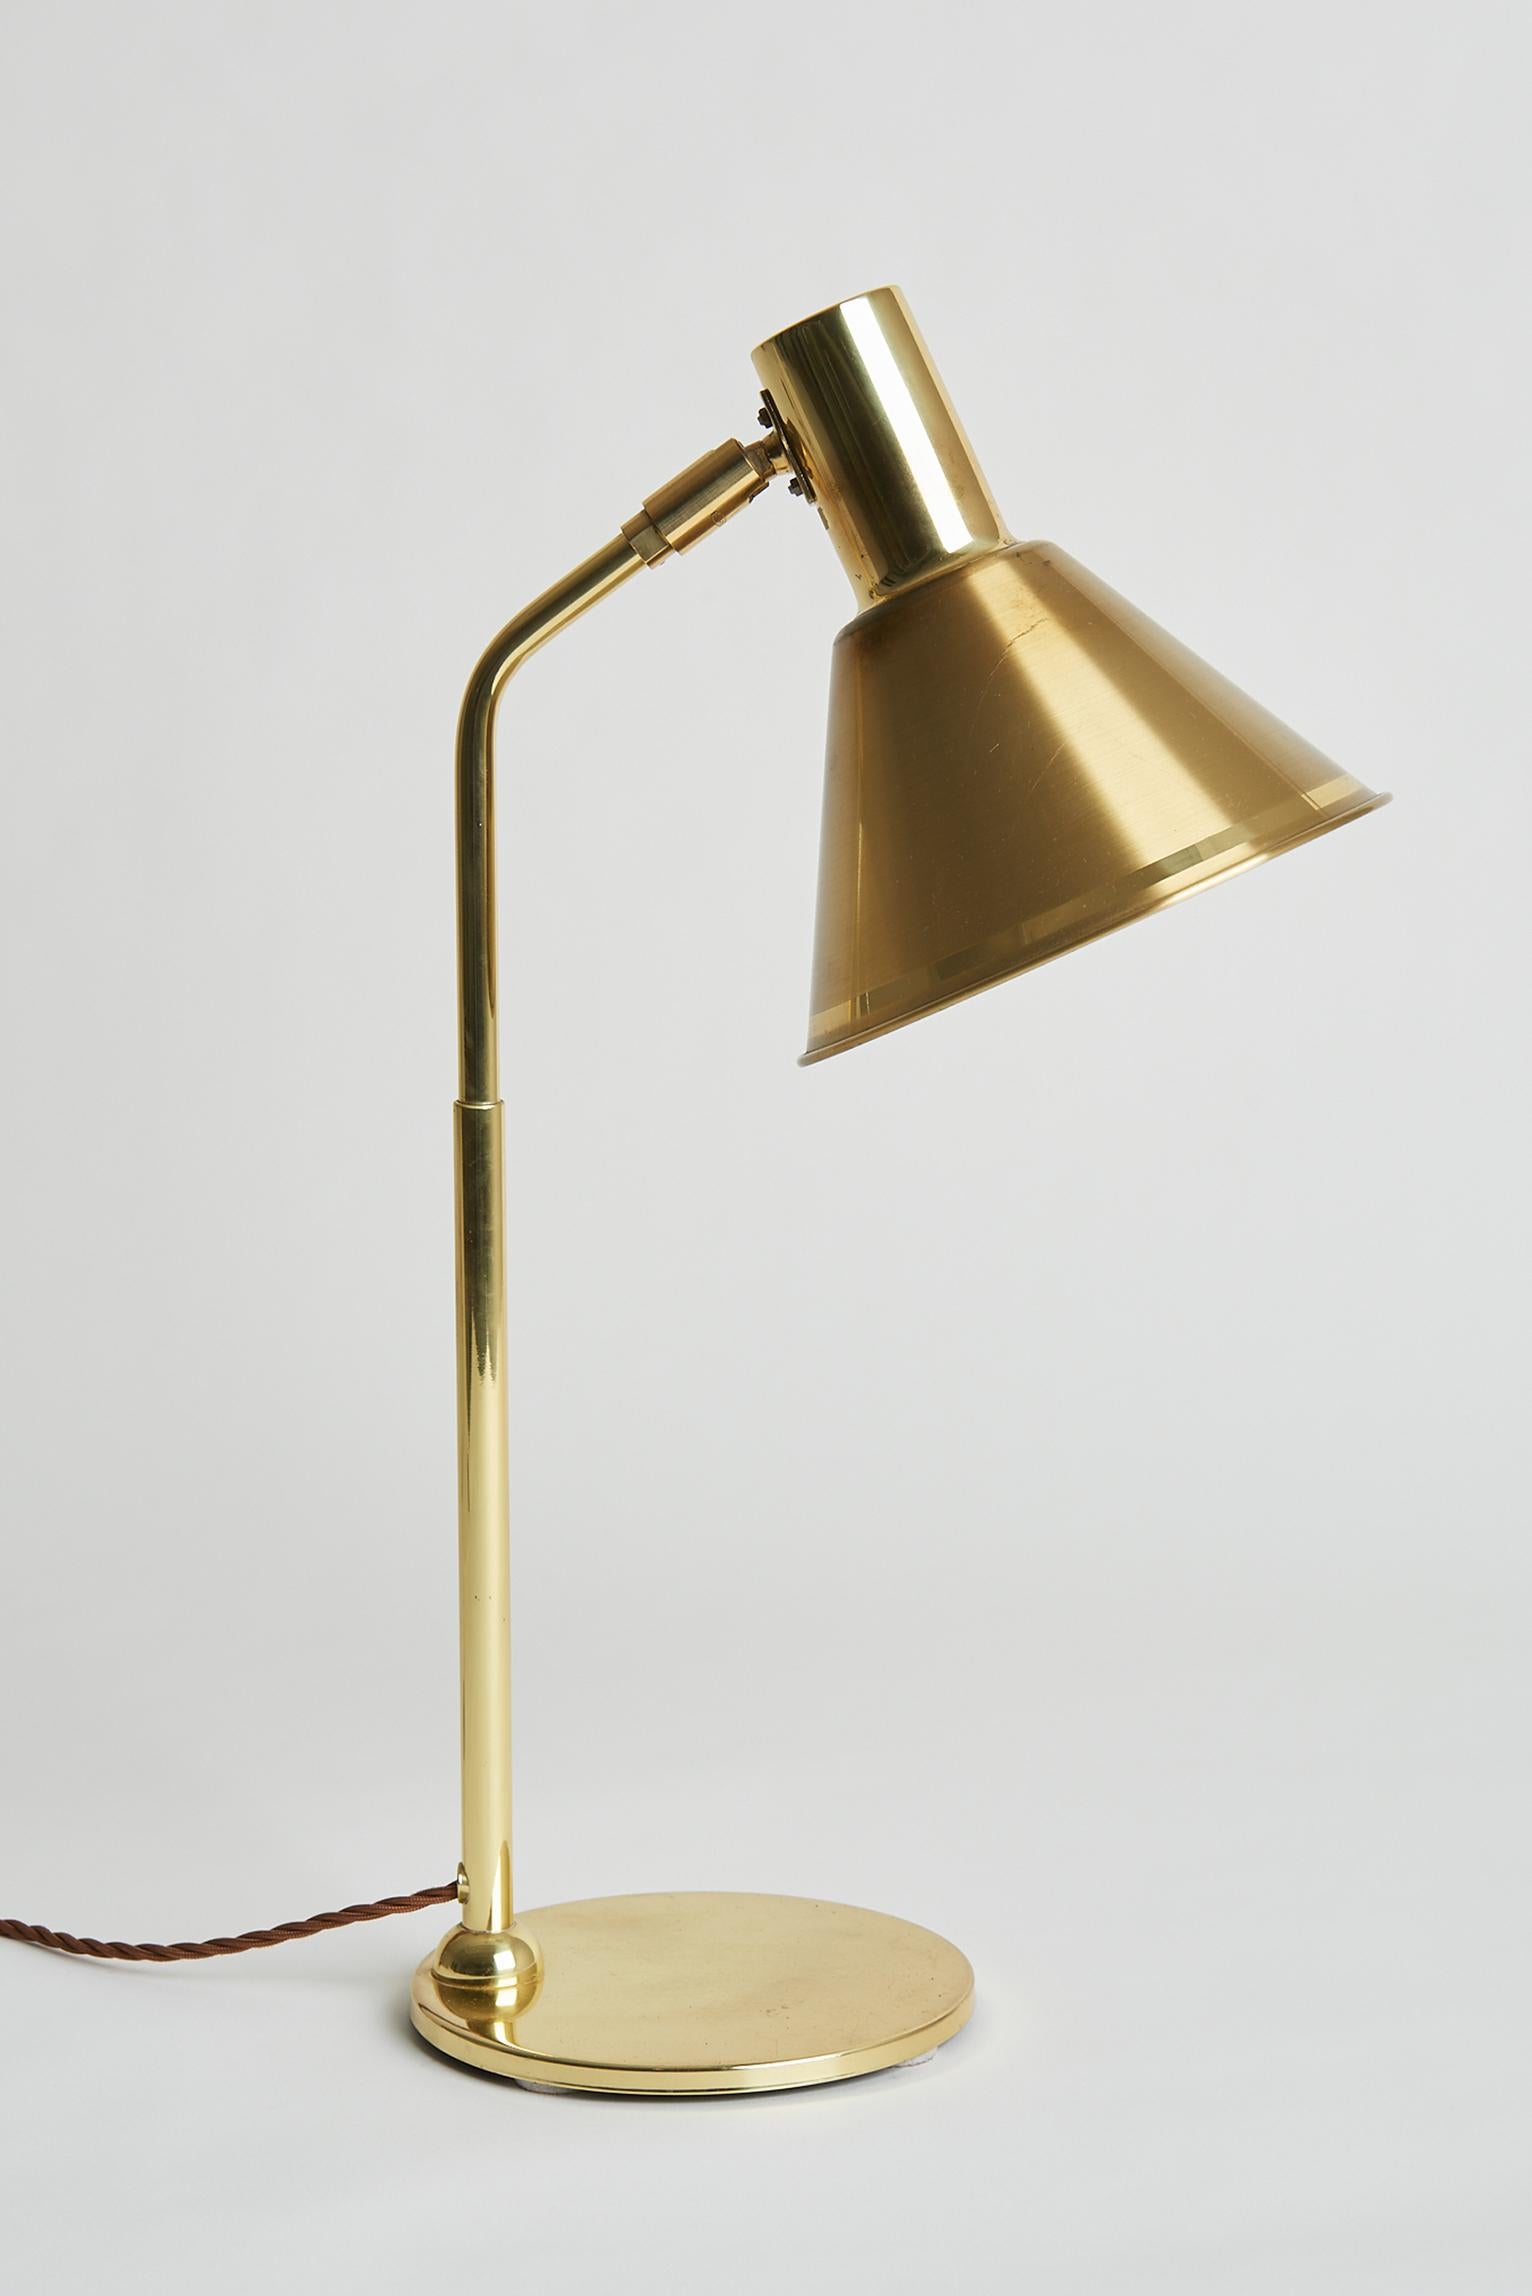 A brass adjustable desk lamp.
Sweden, third quarter of the 20th century.